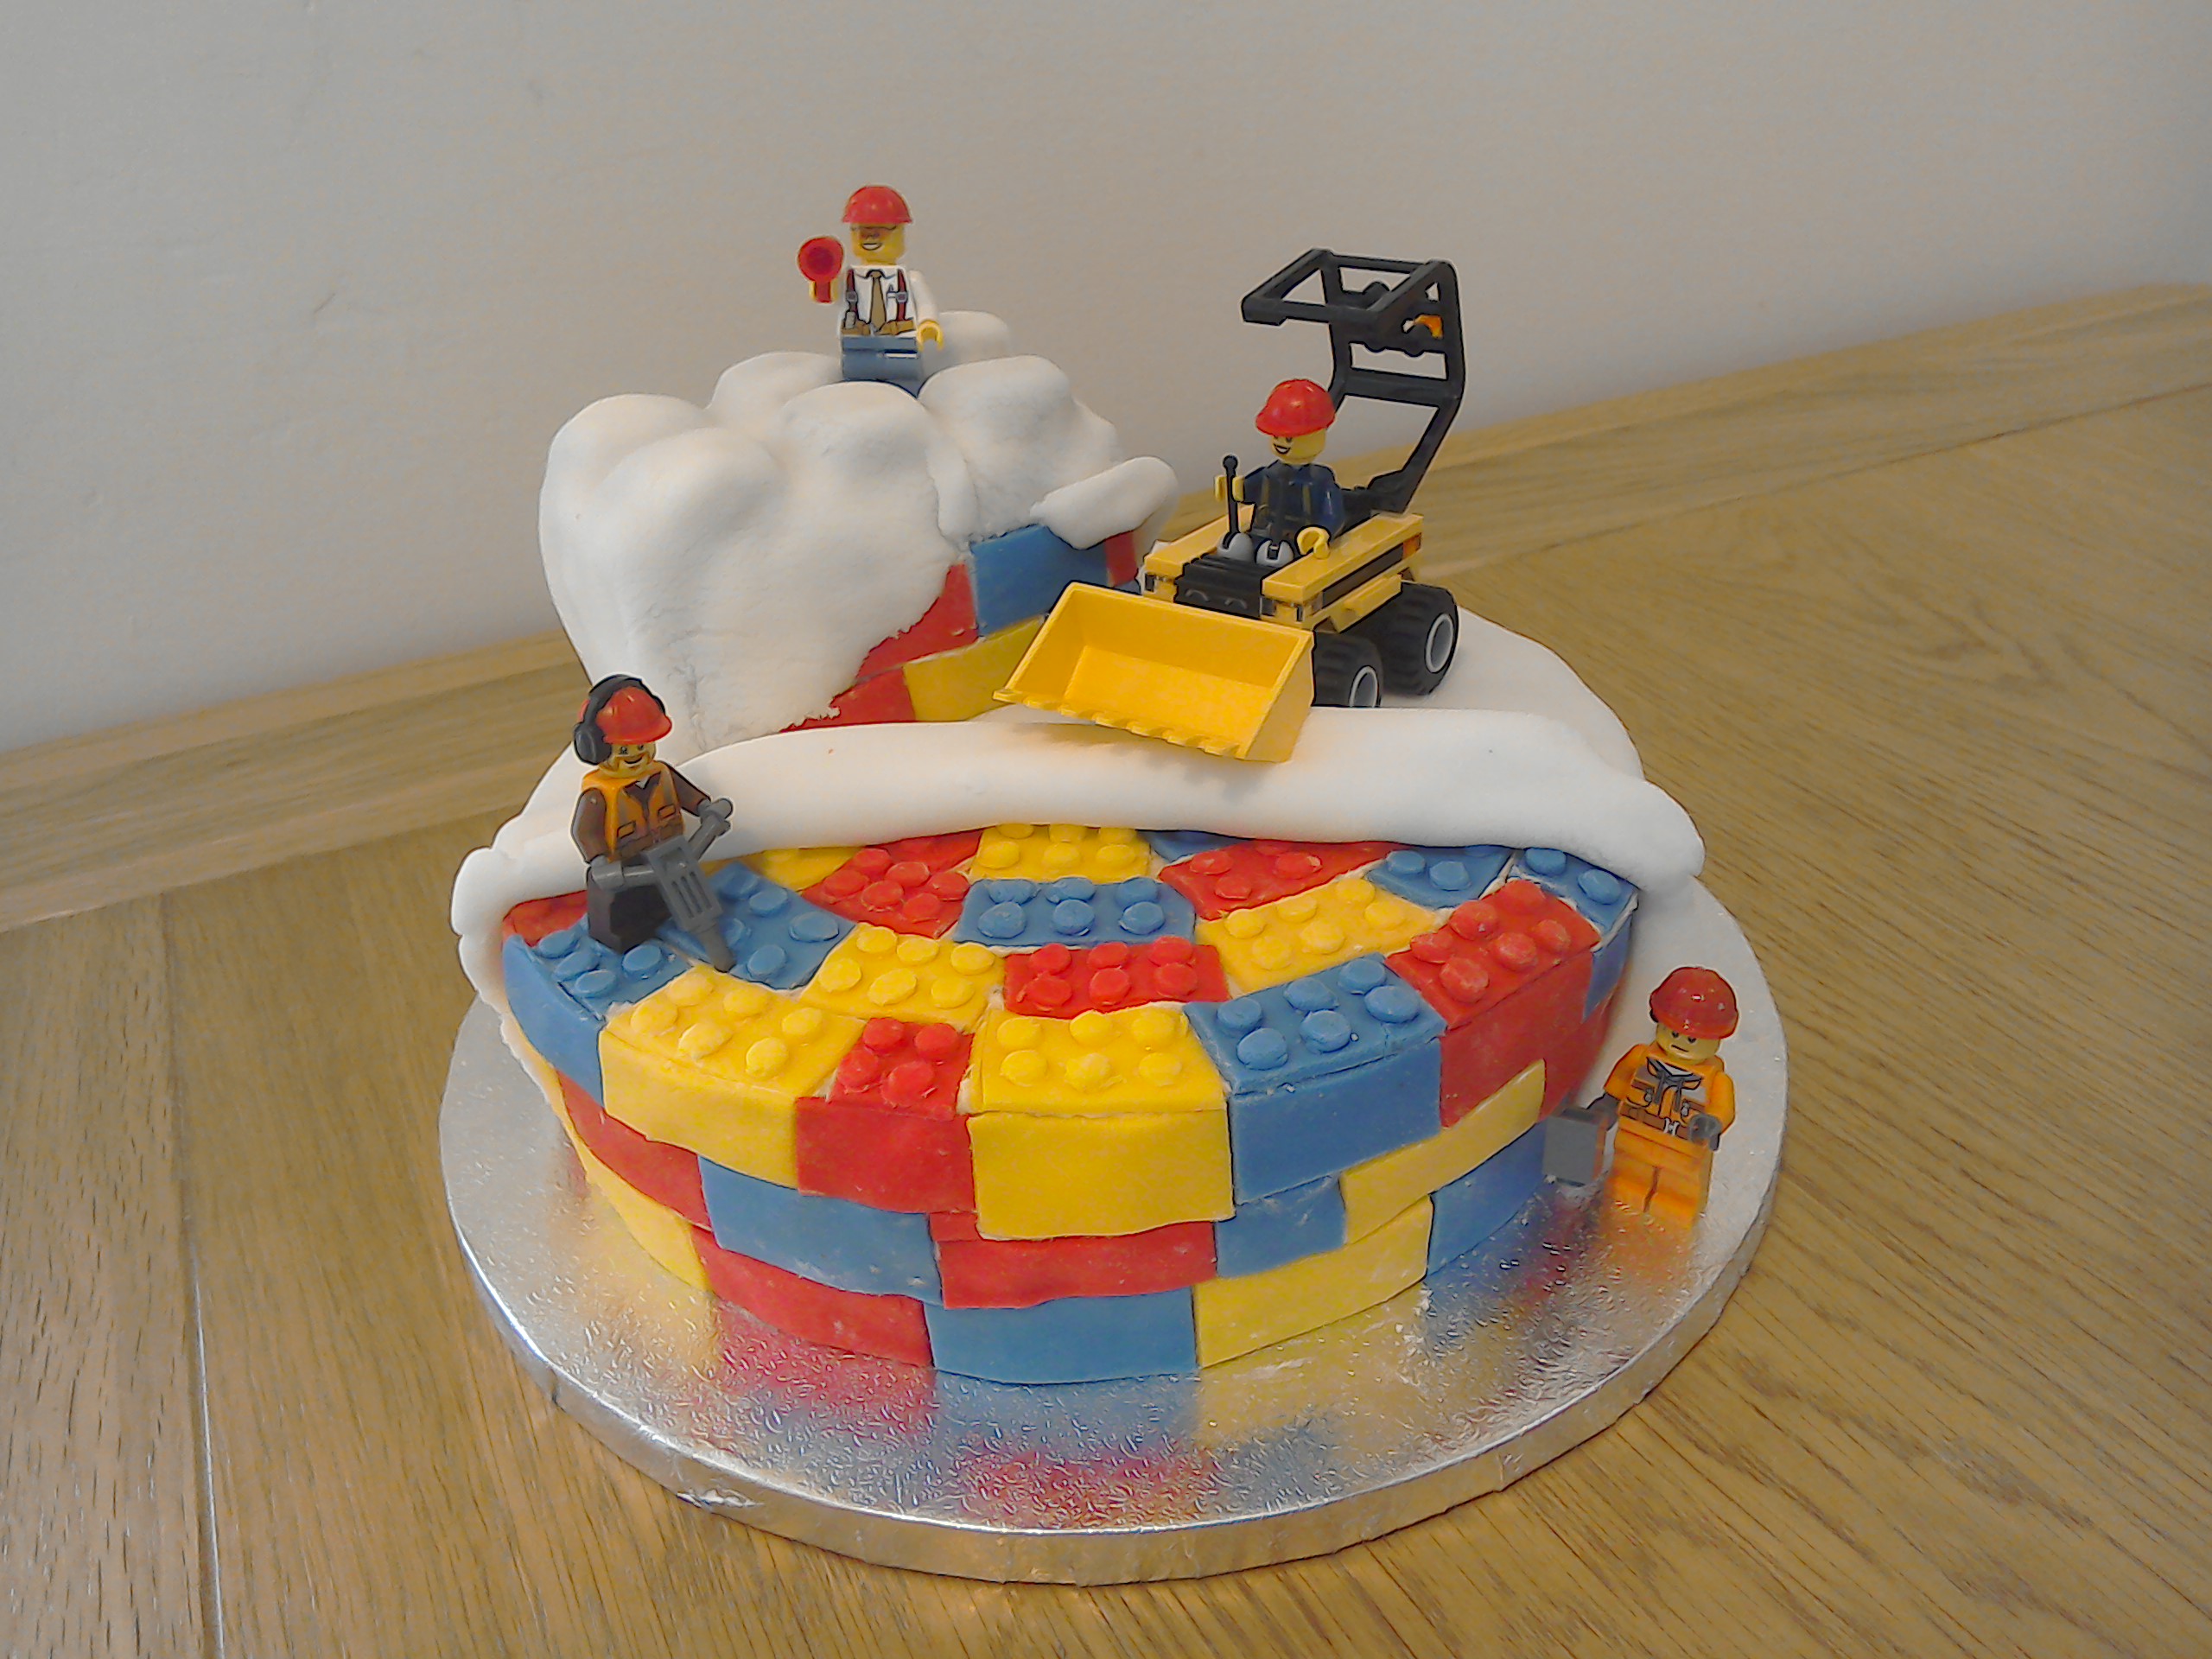 Lego Cake Under Construction - CakeCentral.com